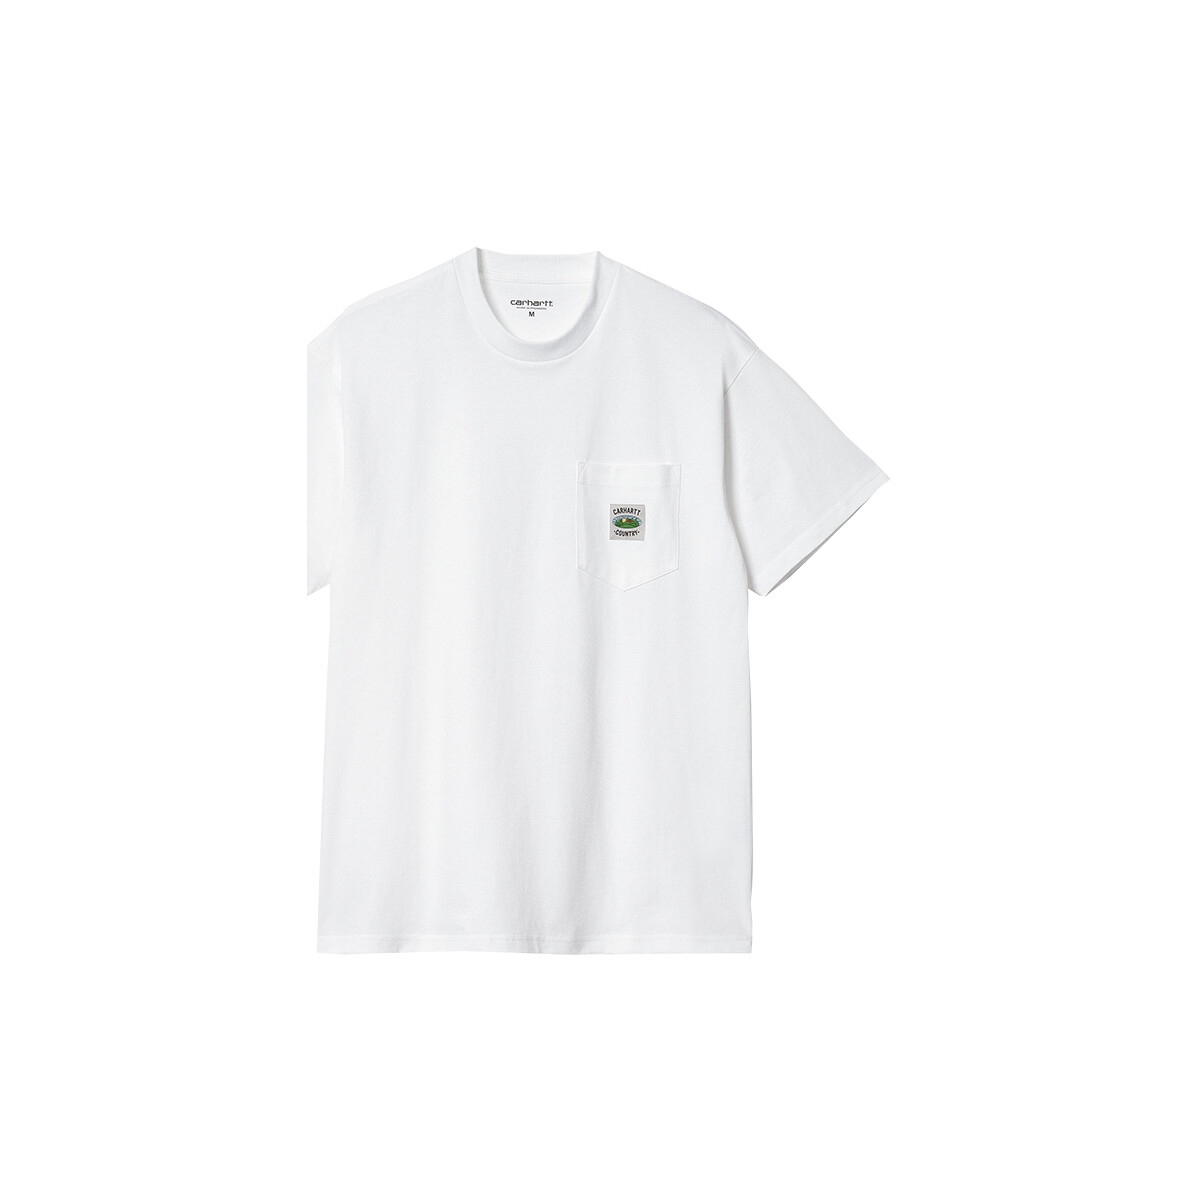 textil Camisetas manga corta Carhartt S/S FIELD POCKET Blanco